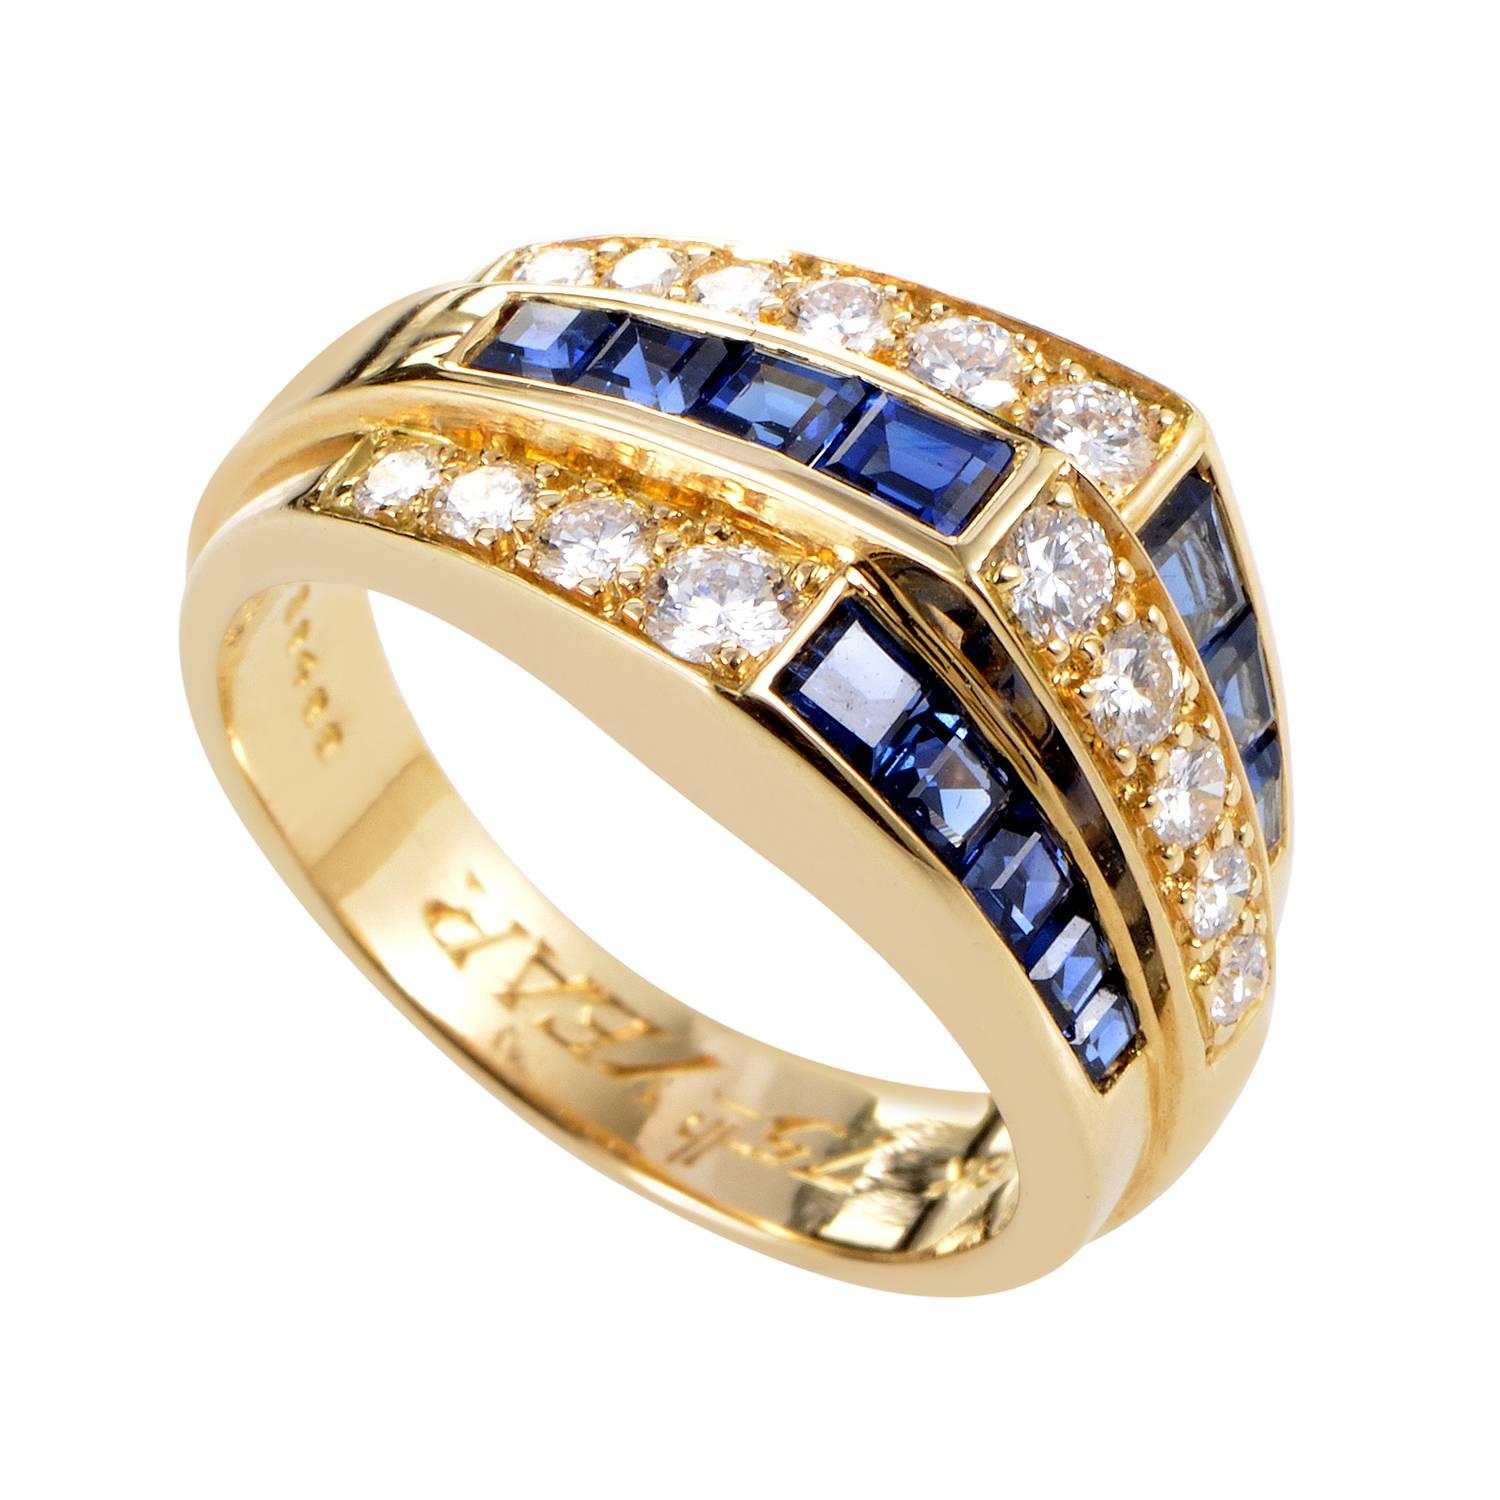 Oscar Heyman Women's 18 Karat Yellow Gold Diamond and Sapphire Ring AK1B4235